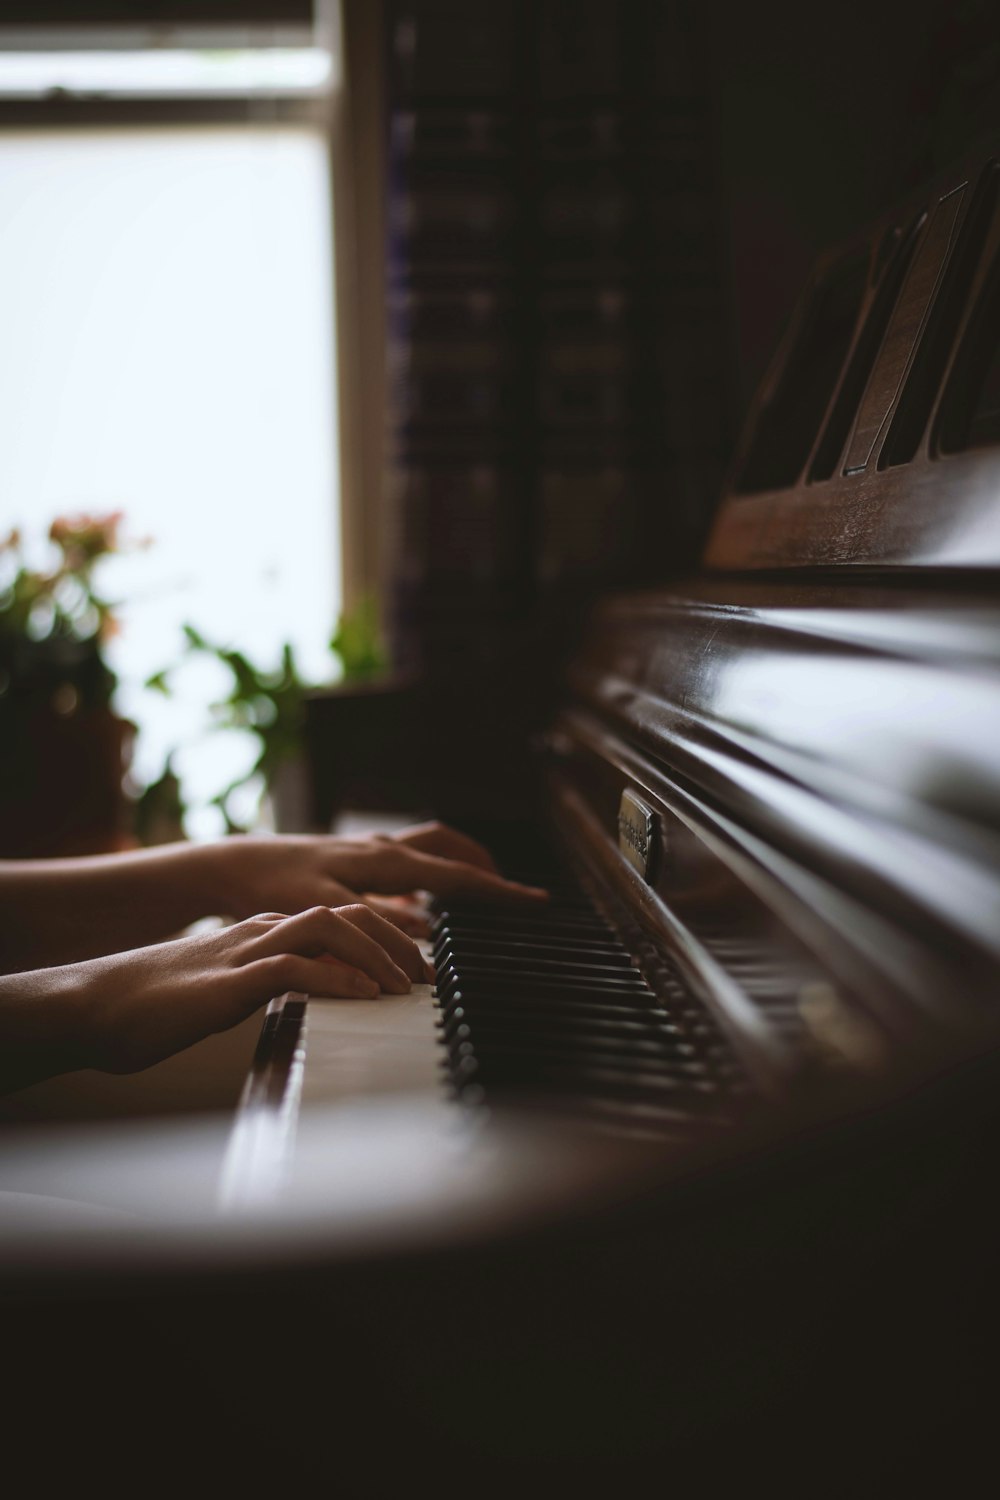 pessoa que joga piano na fotografia em tons de cinza